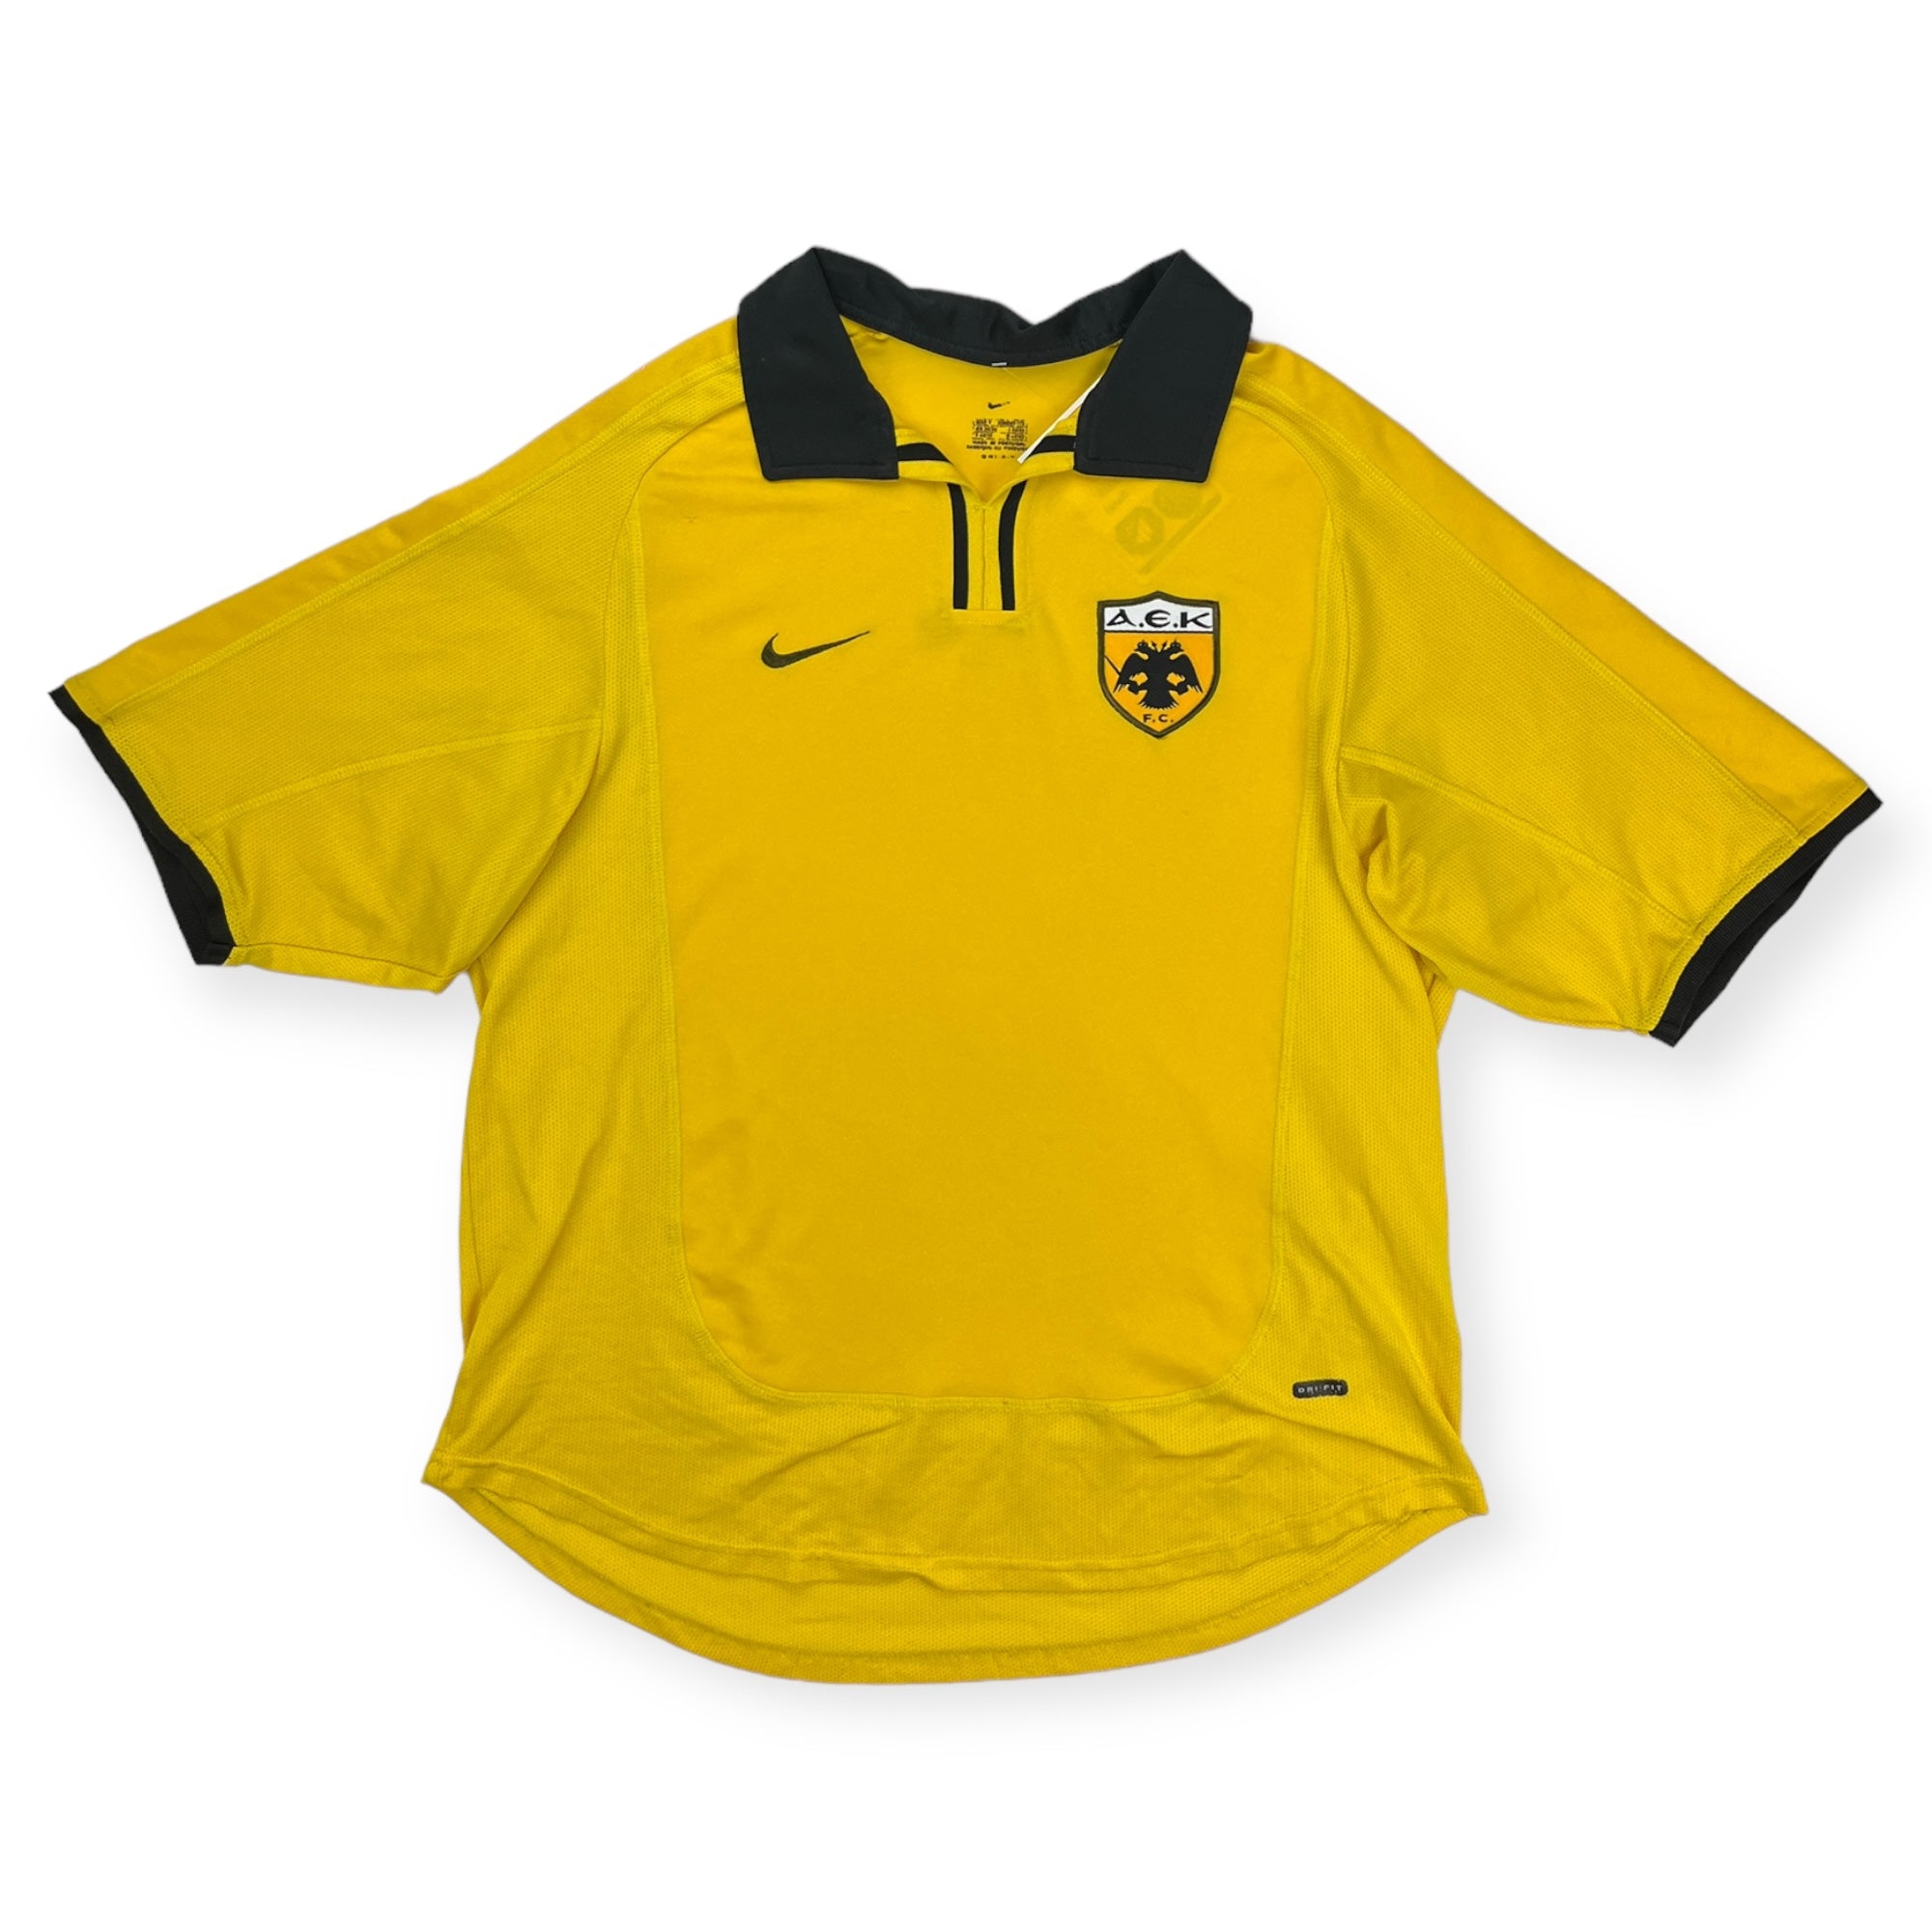 AEK 2000 Home Shirt